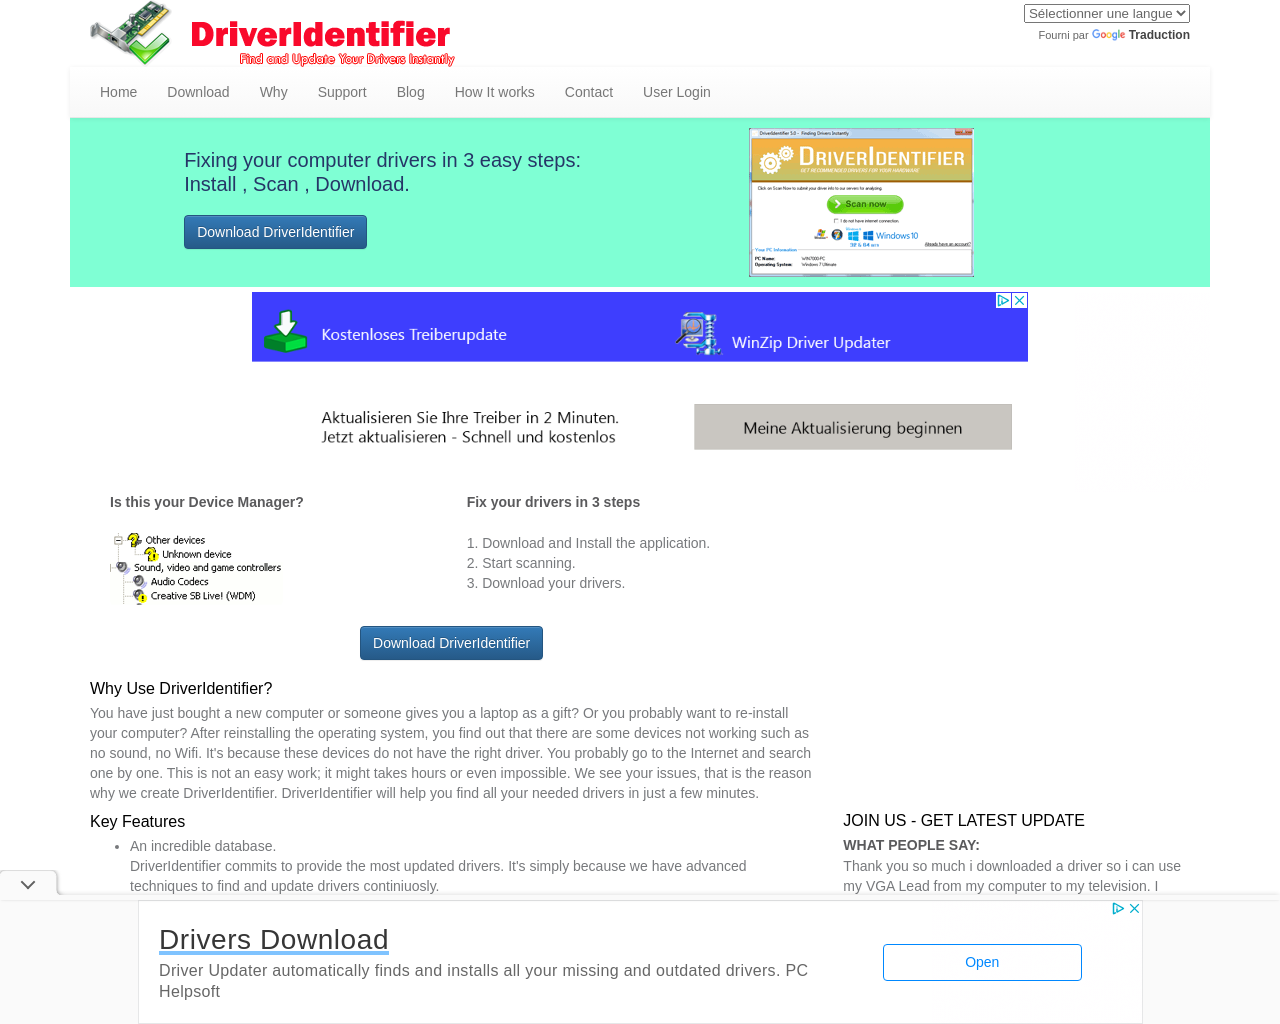 www.driveridentifier.com